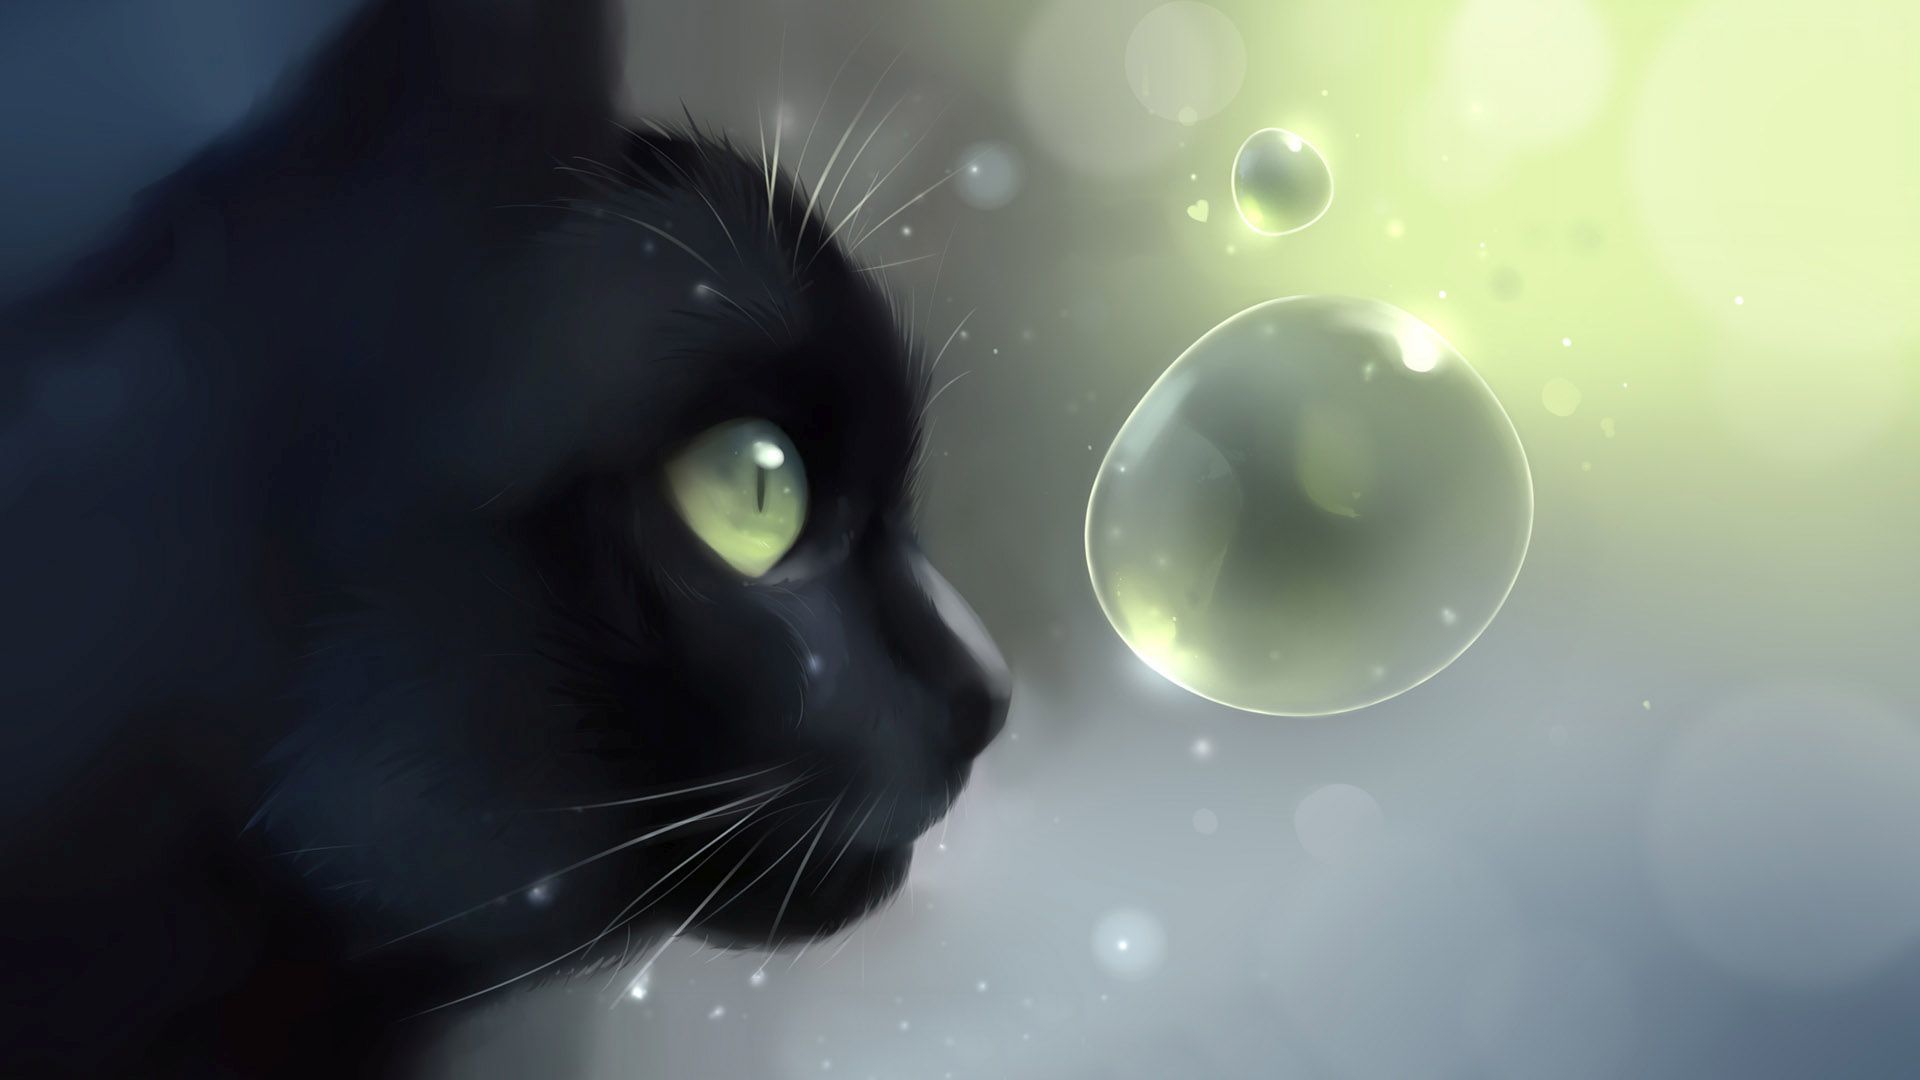 Black cat looking at the bubbles Wallpaper 24834